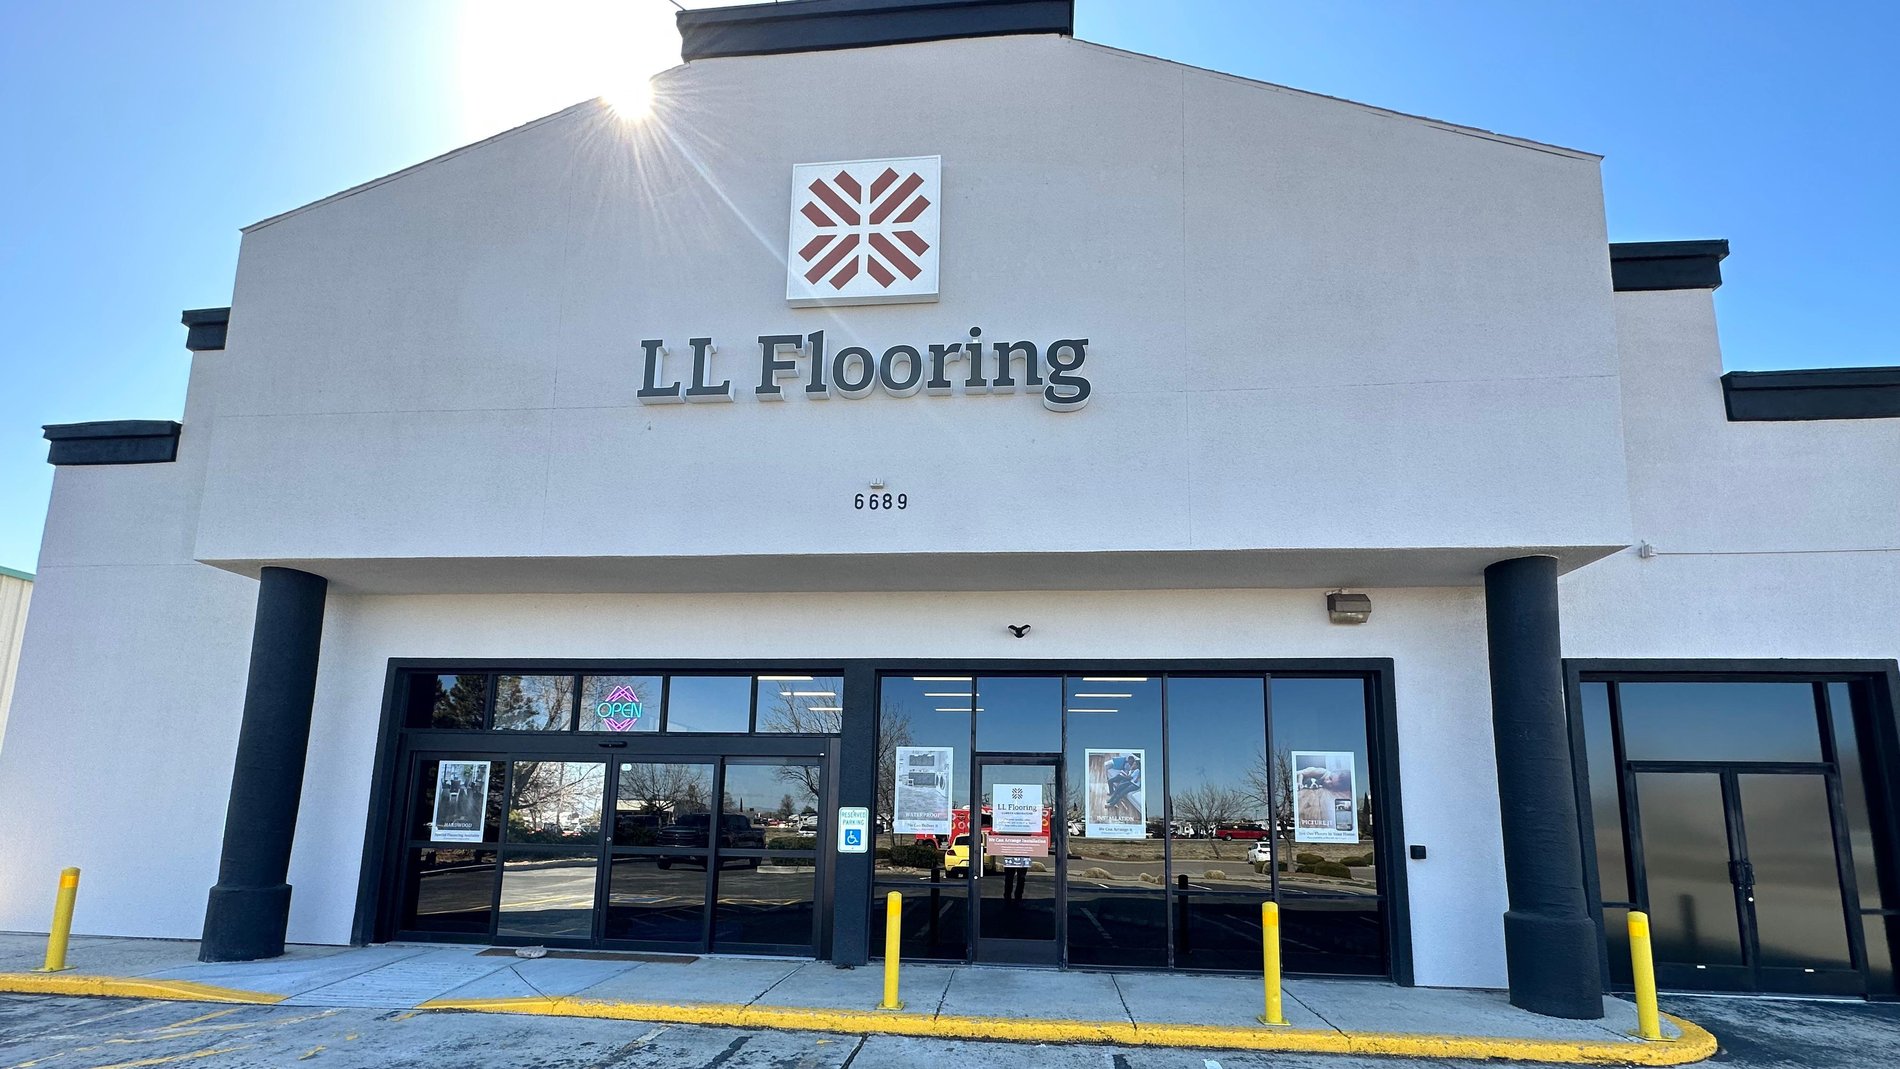 LL Flooring #1460 Prescott Valley | 6689 East 1st Street | Storefront